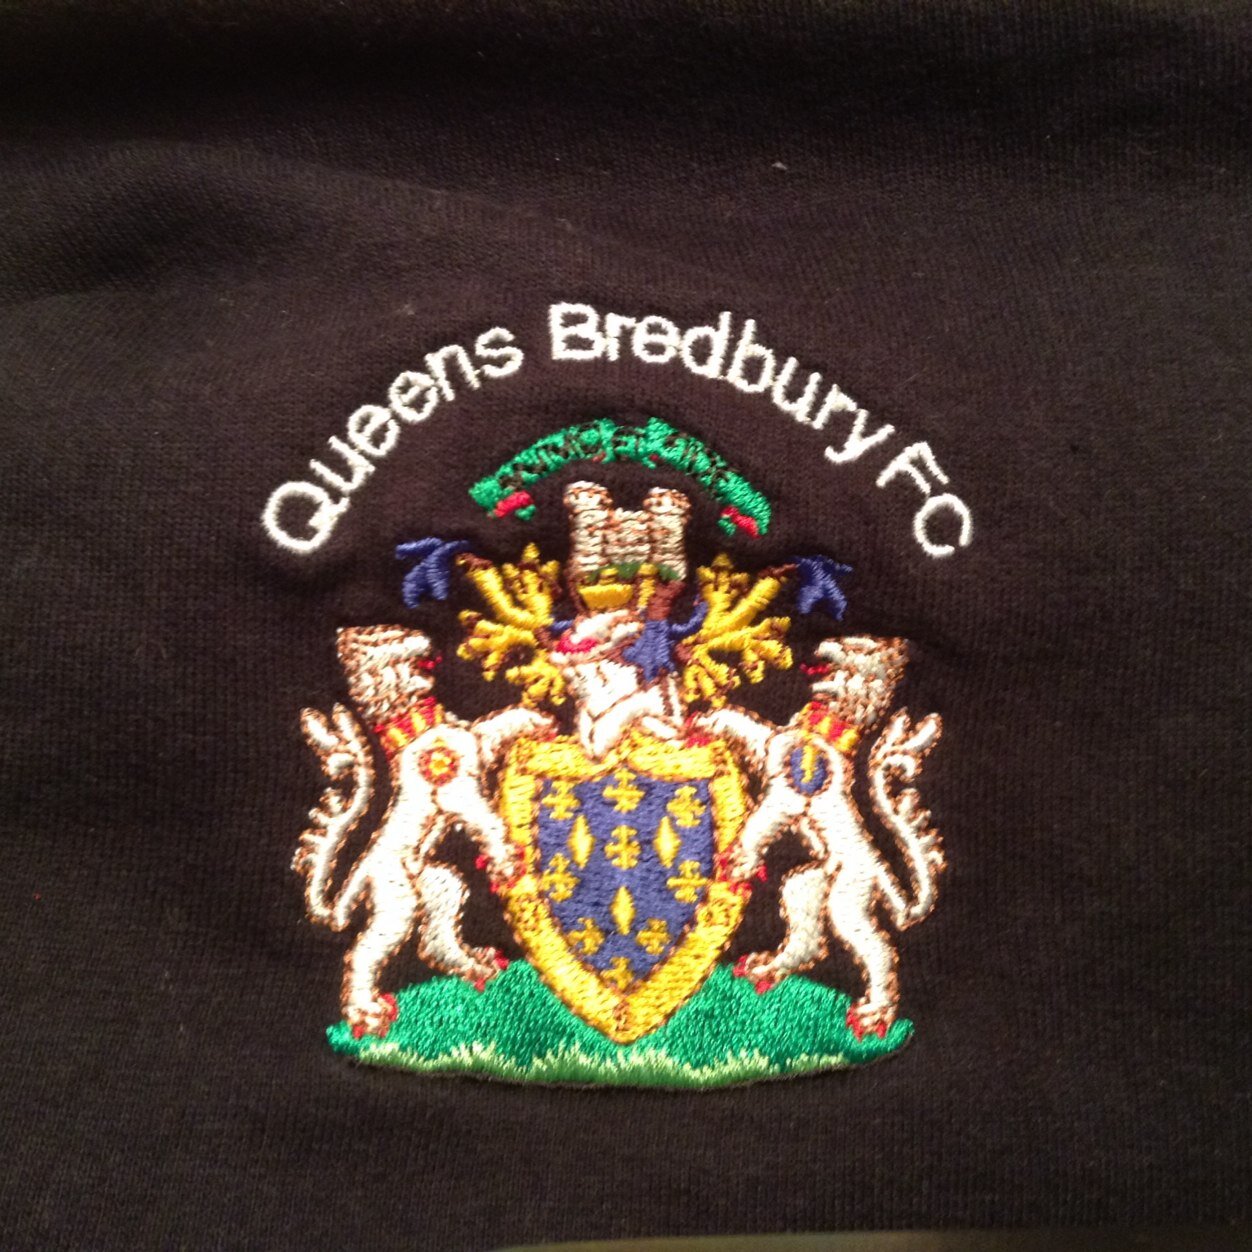 Queens Bredbury FC